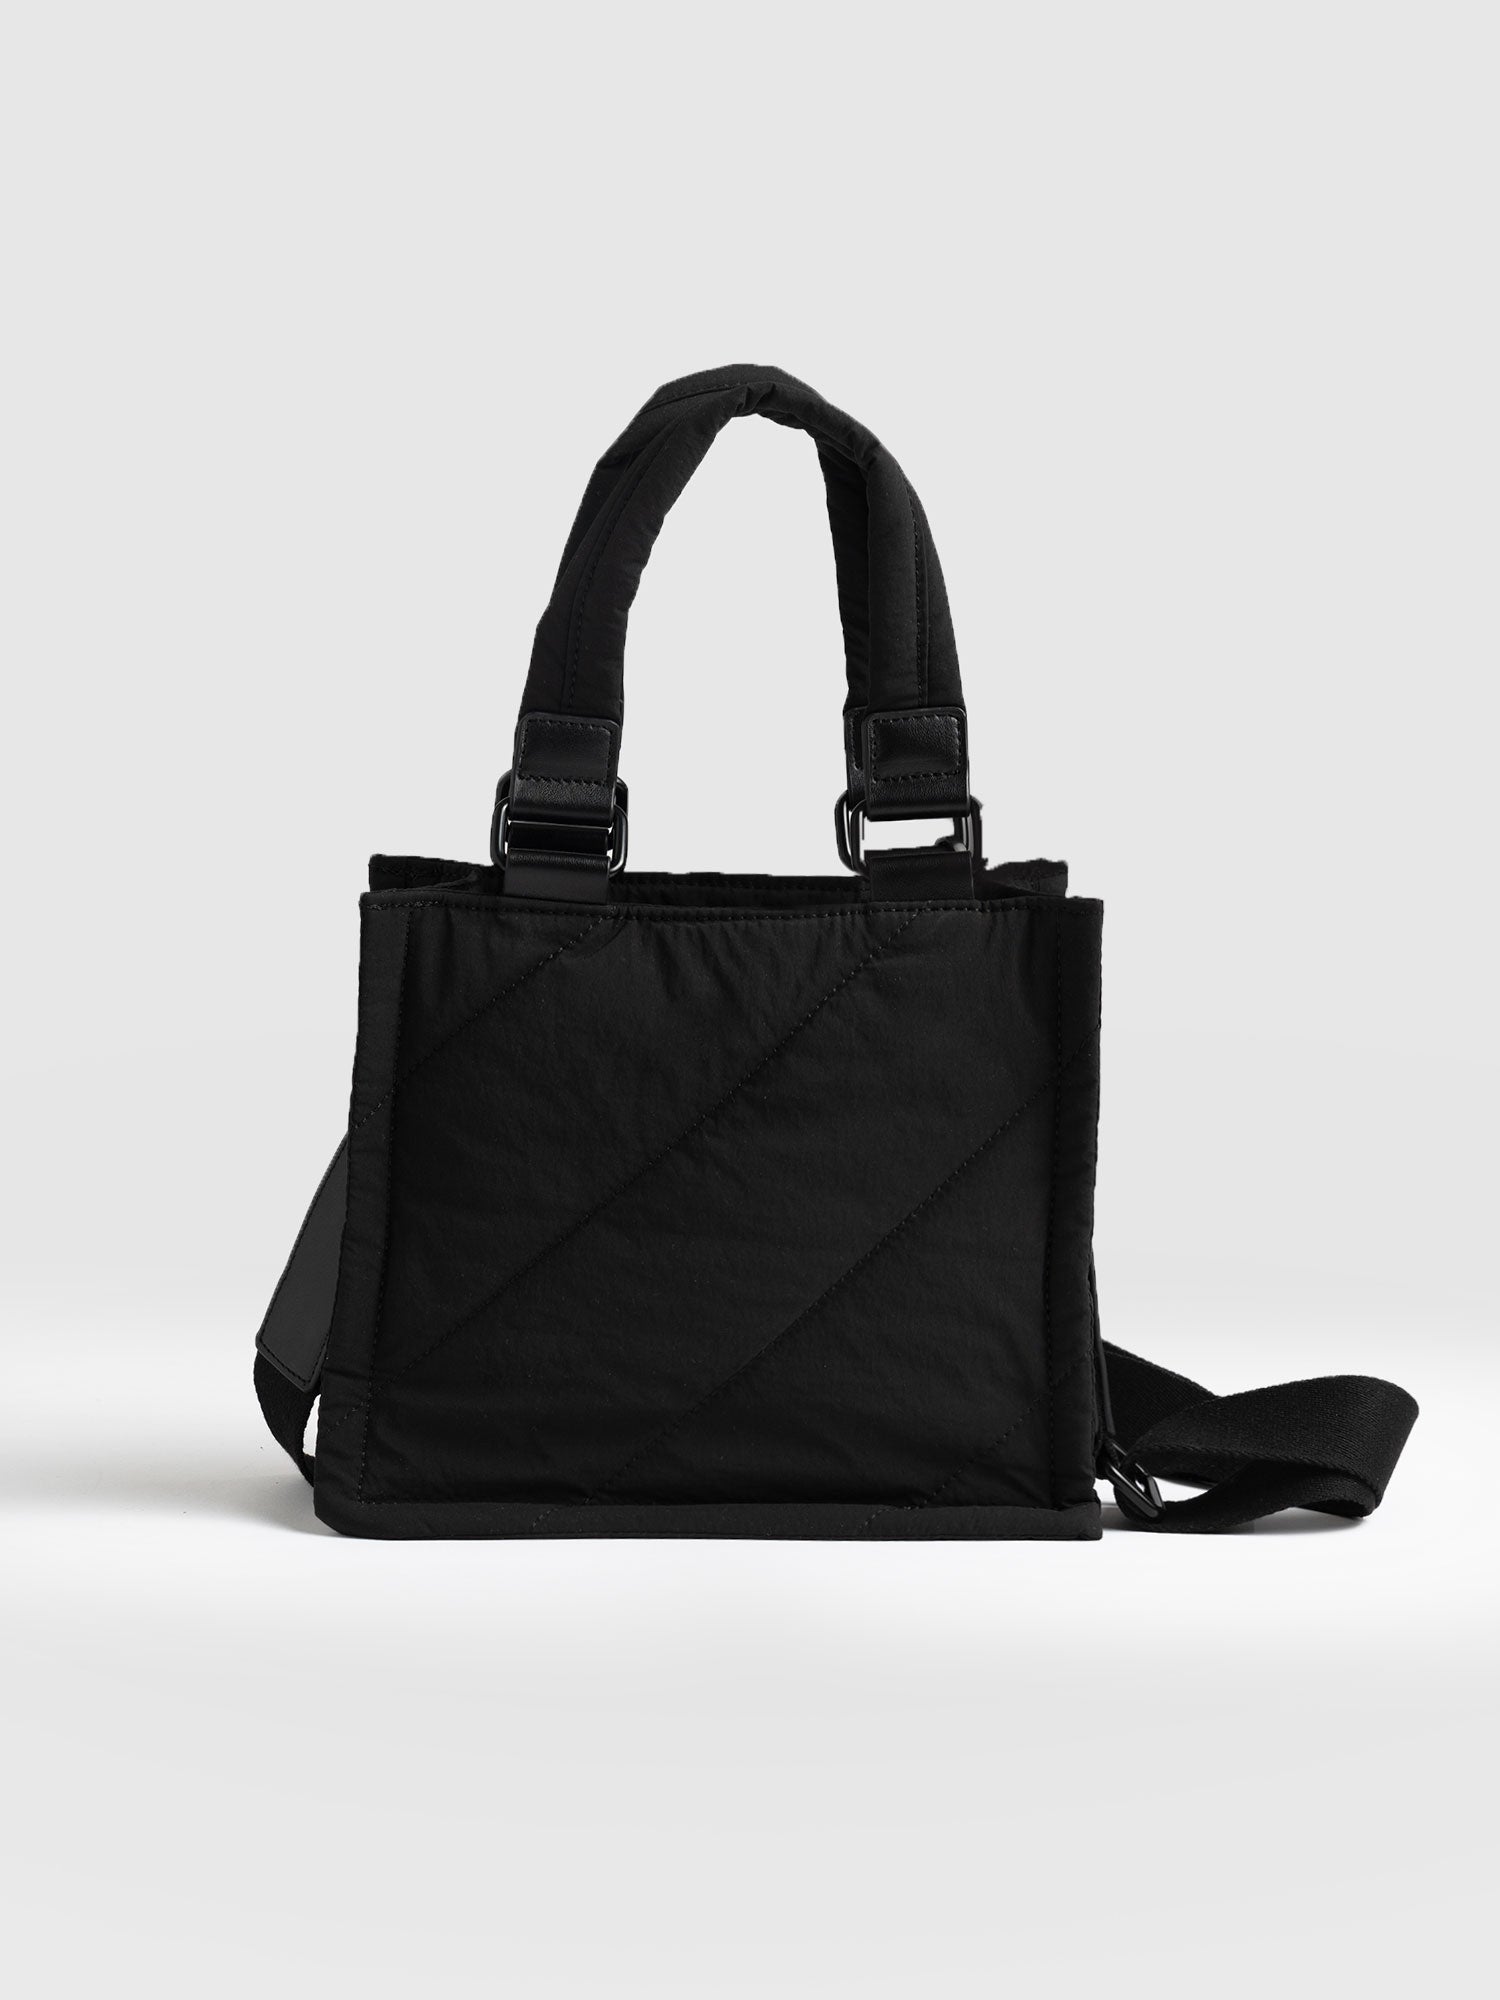 Miss Dior Bags & Mini Bags for Women | Women's Bags | DIOR